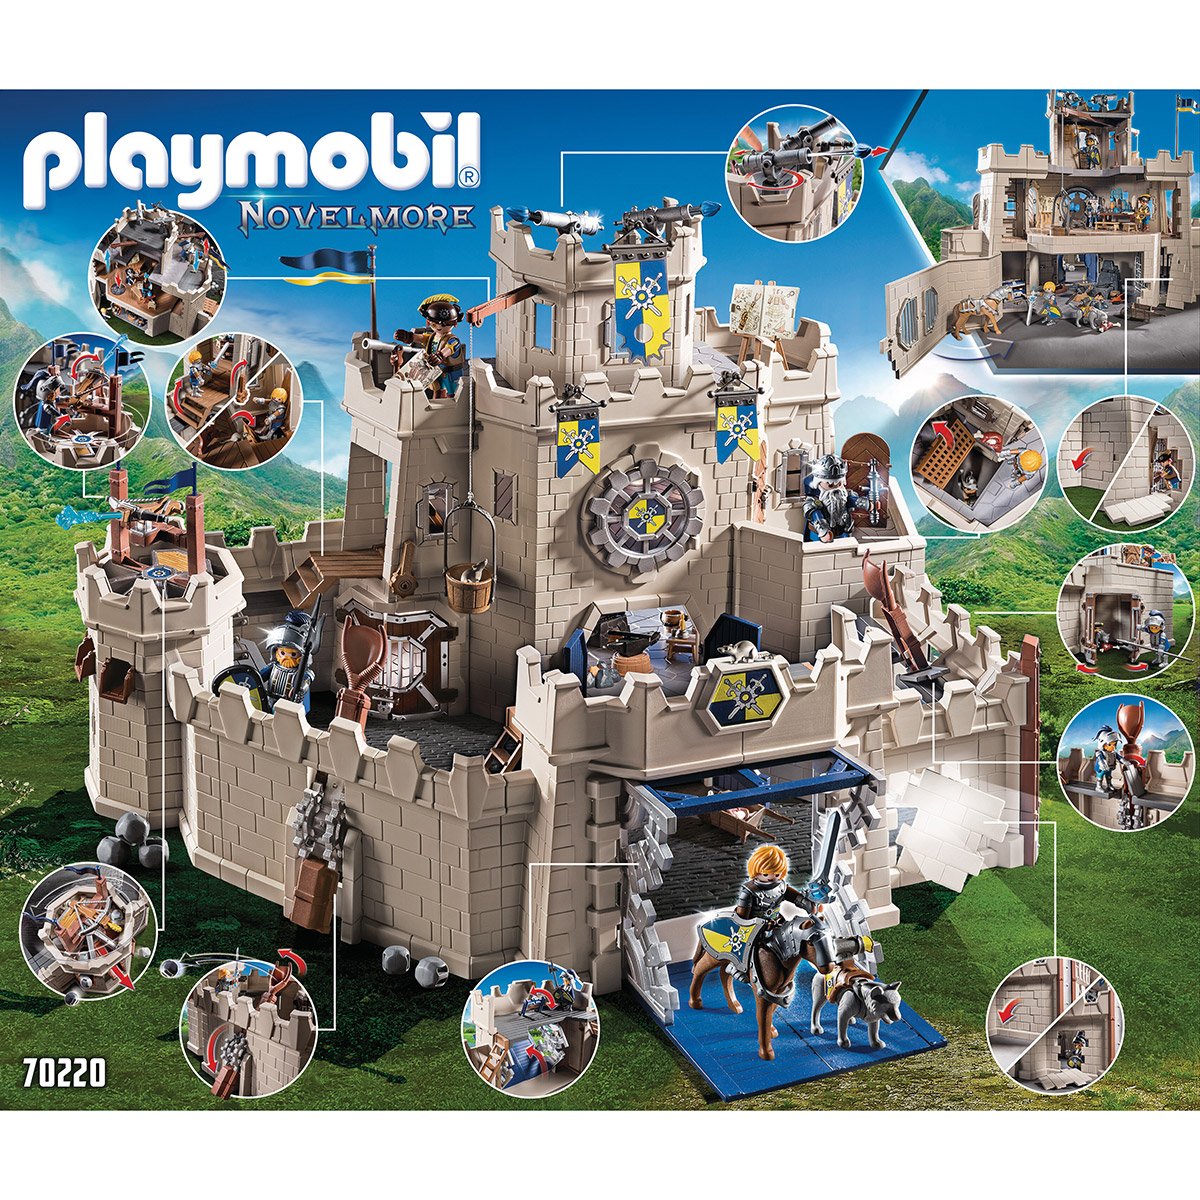 Grand château des Chevaliers Playmobil Novelmore 70220